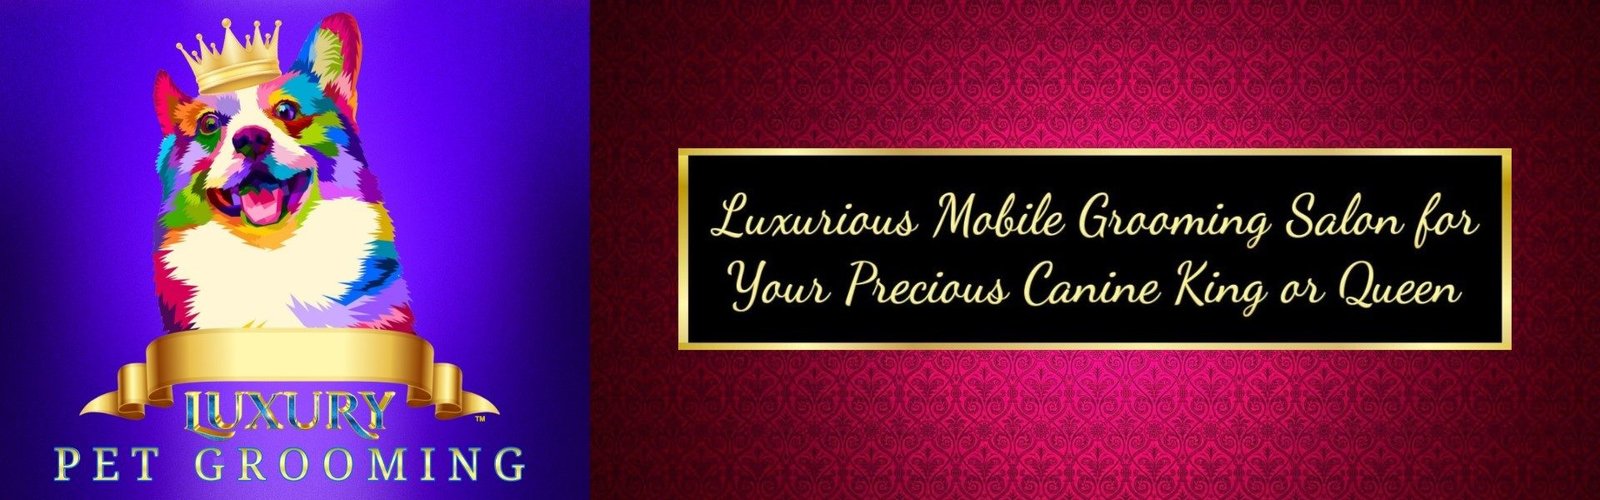 Luxury Pet Grooming Mobile Salon